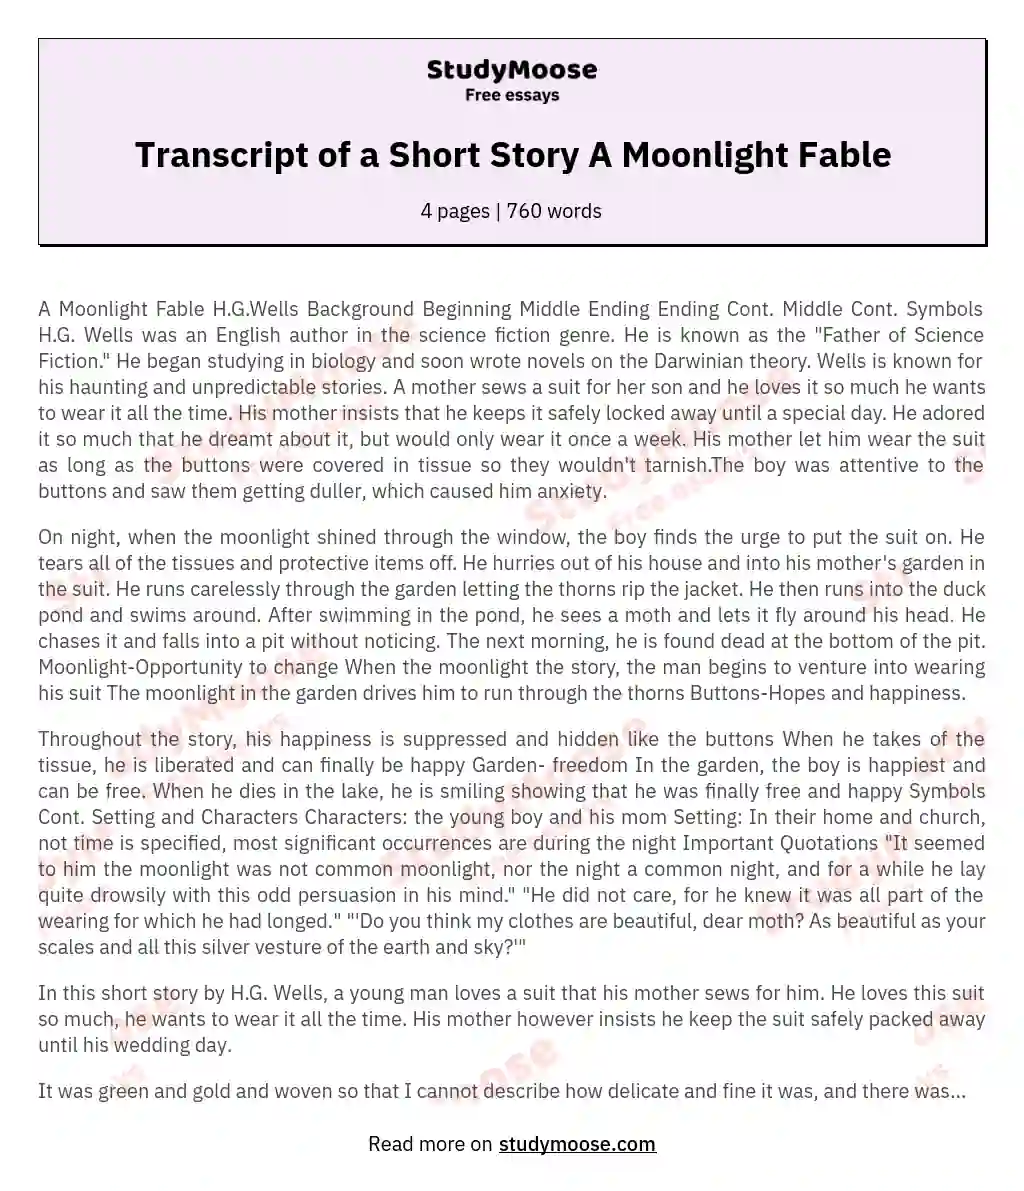 Transcript of a Short Story A Moonlight Fable